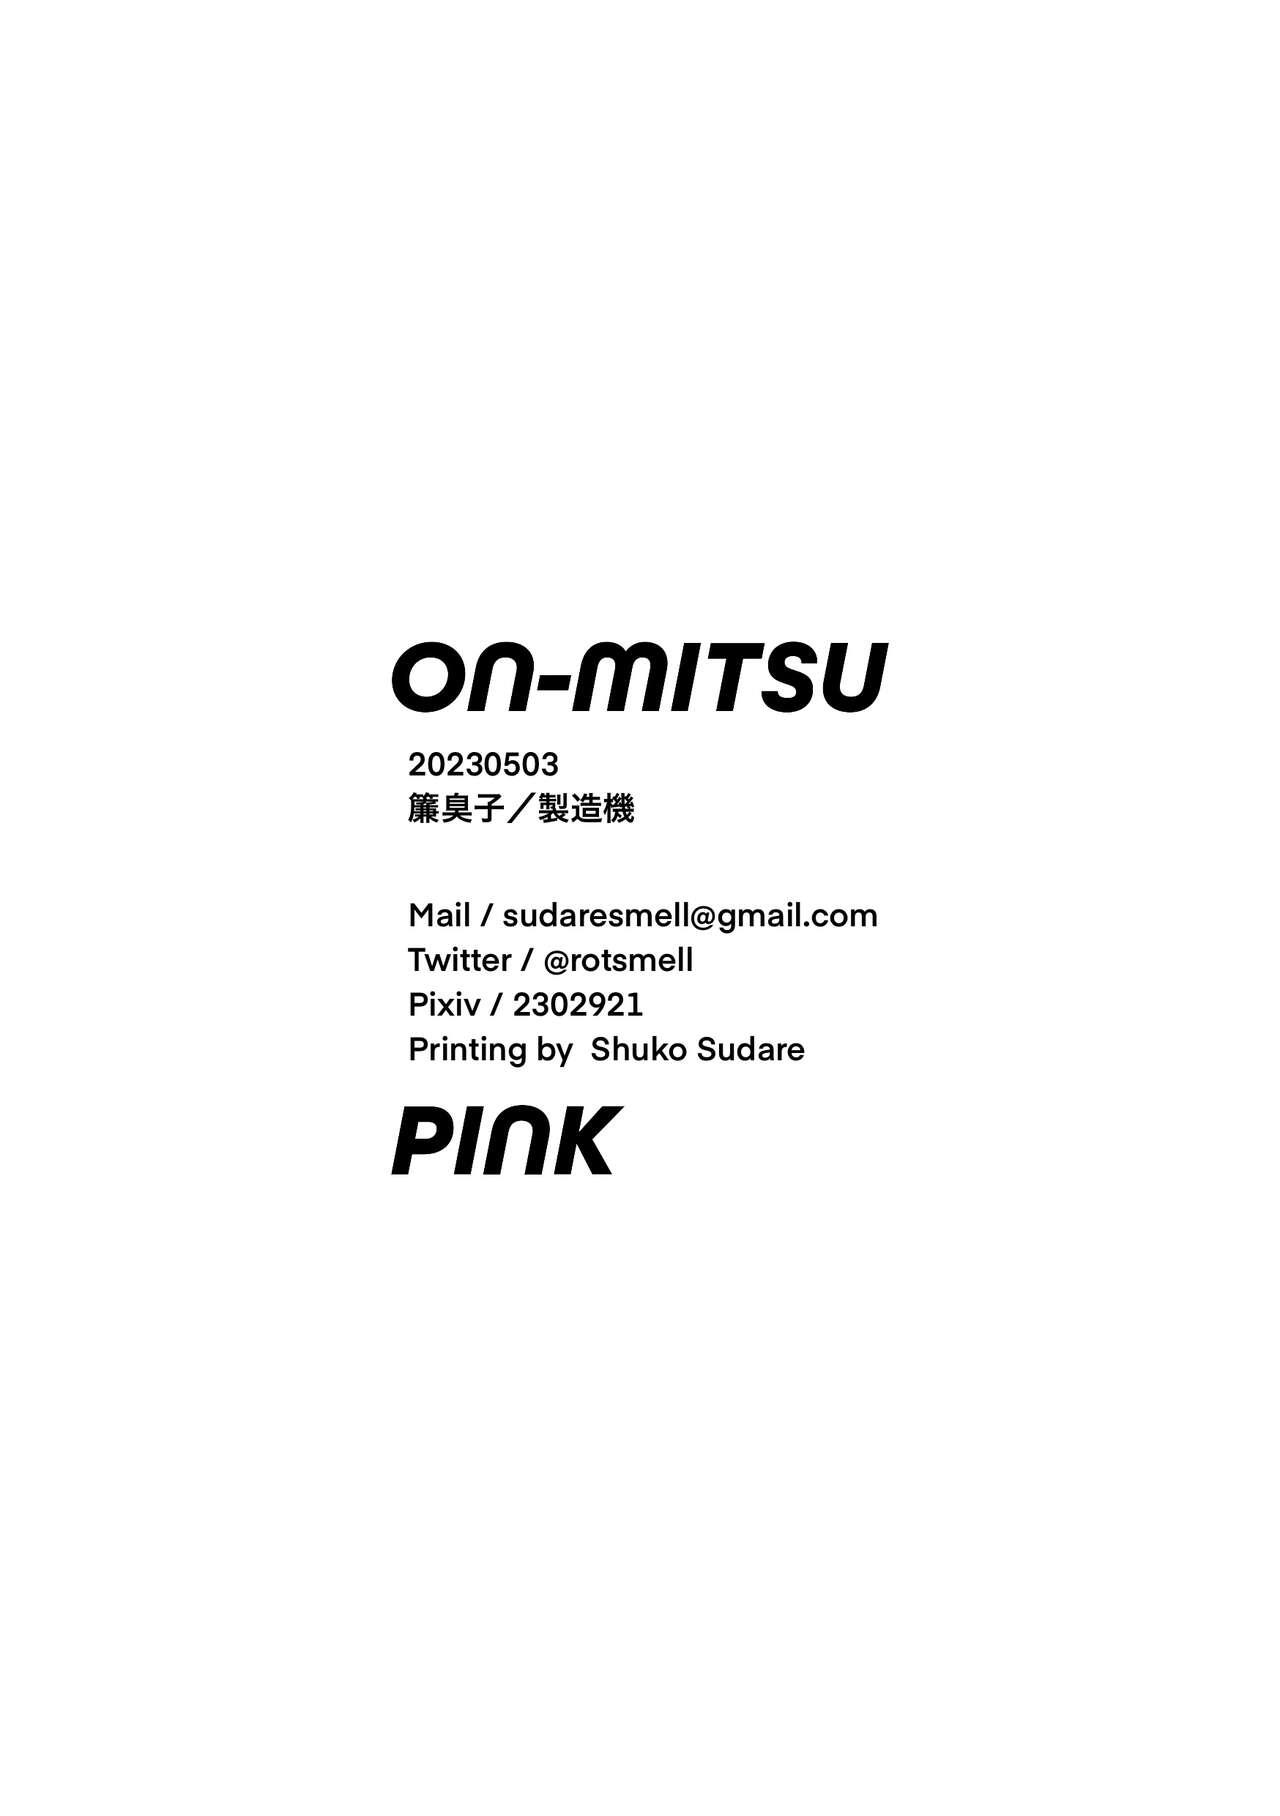 ON-MITSU PINK 11